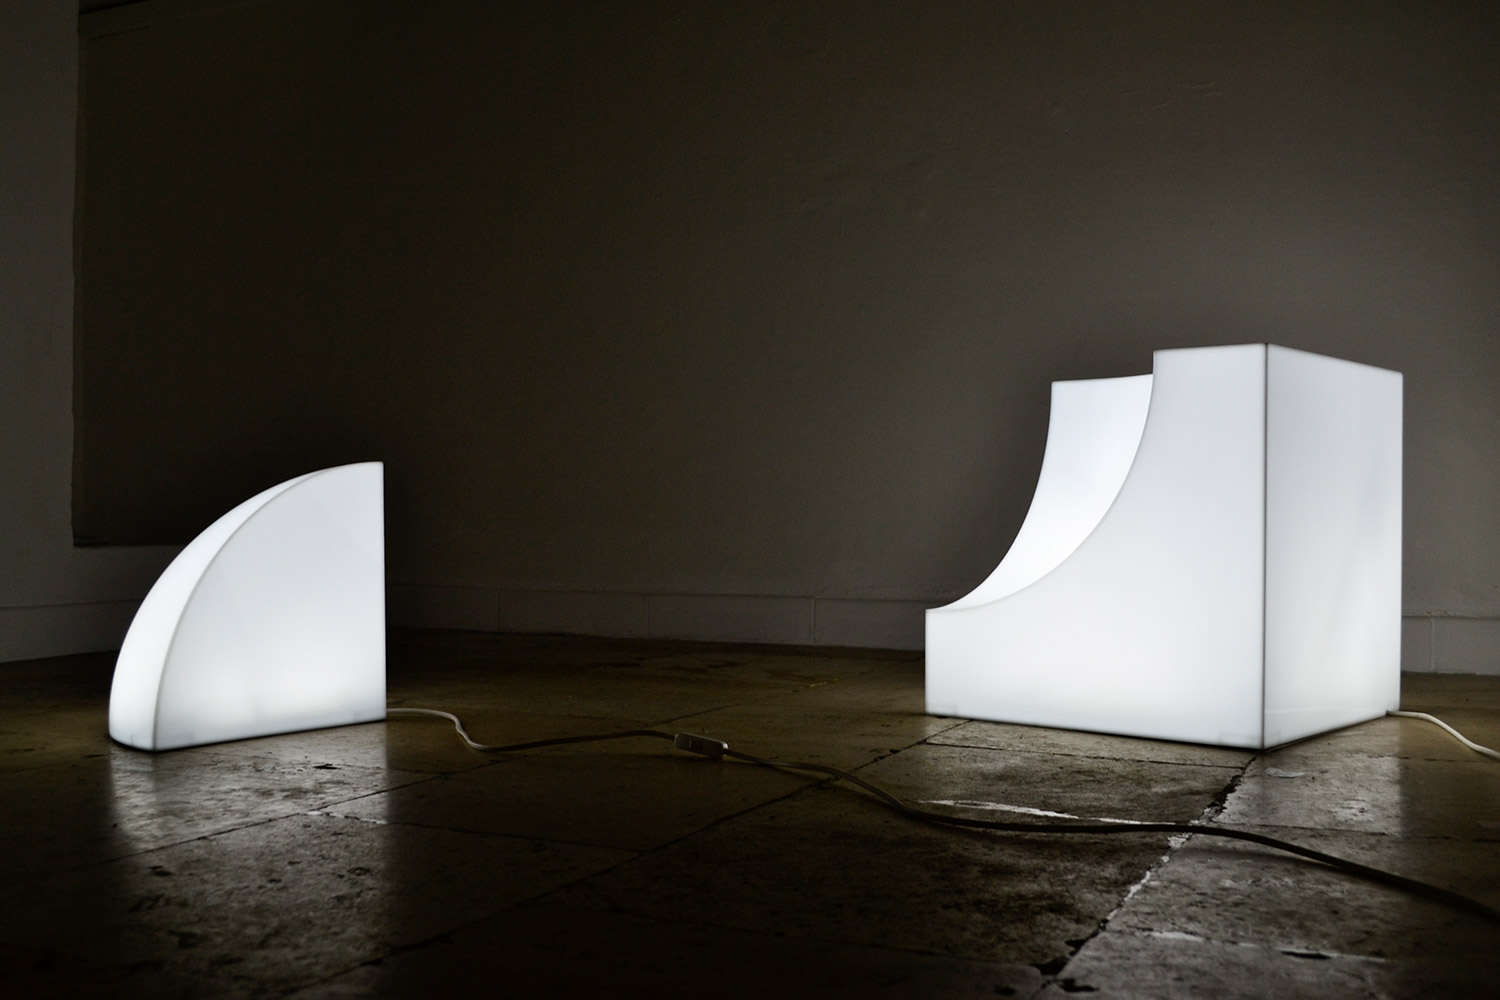 Antonio Trotta, Lampada sferica, 1972-2016, plexiglass, luce, due elementi 40x40x40 cm